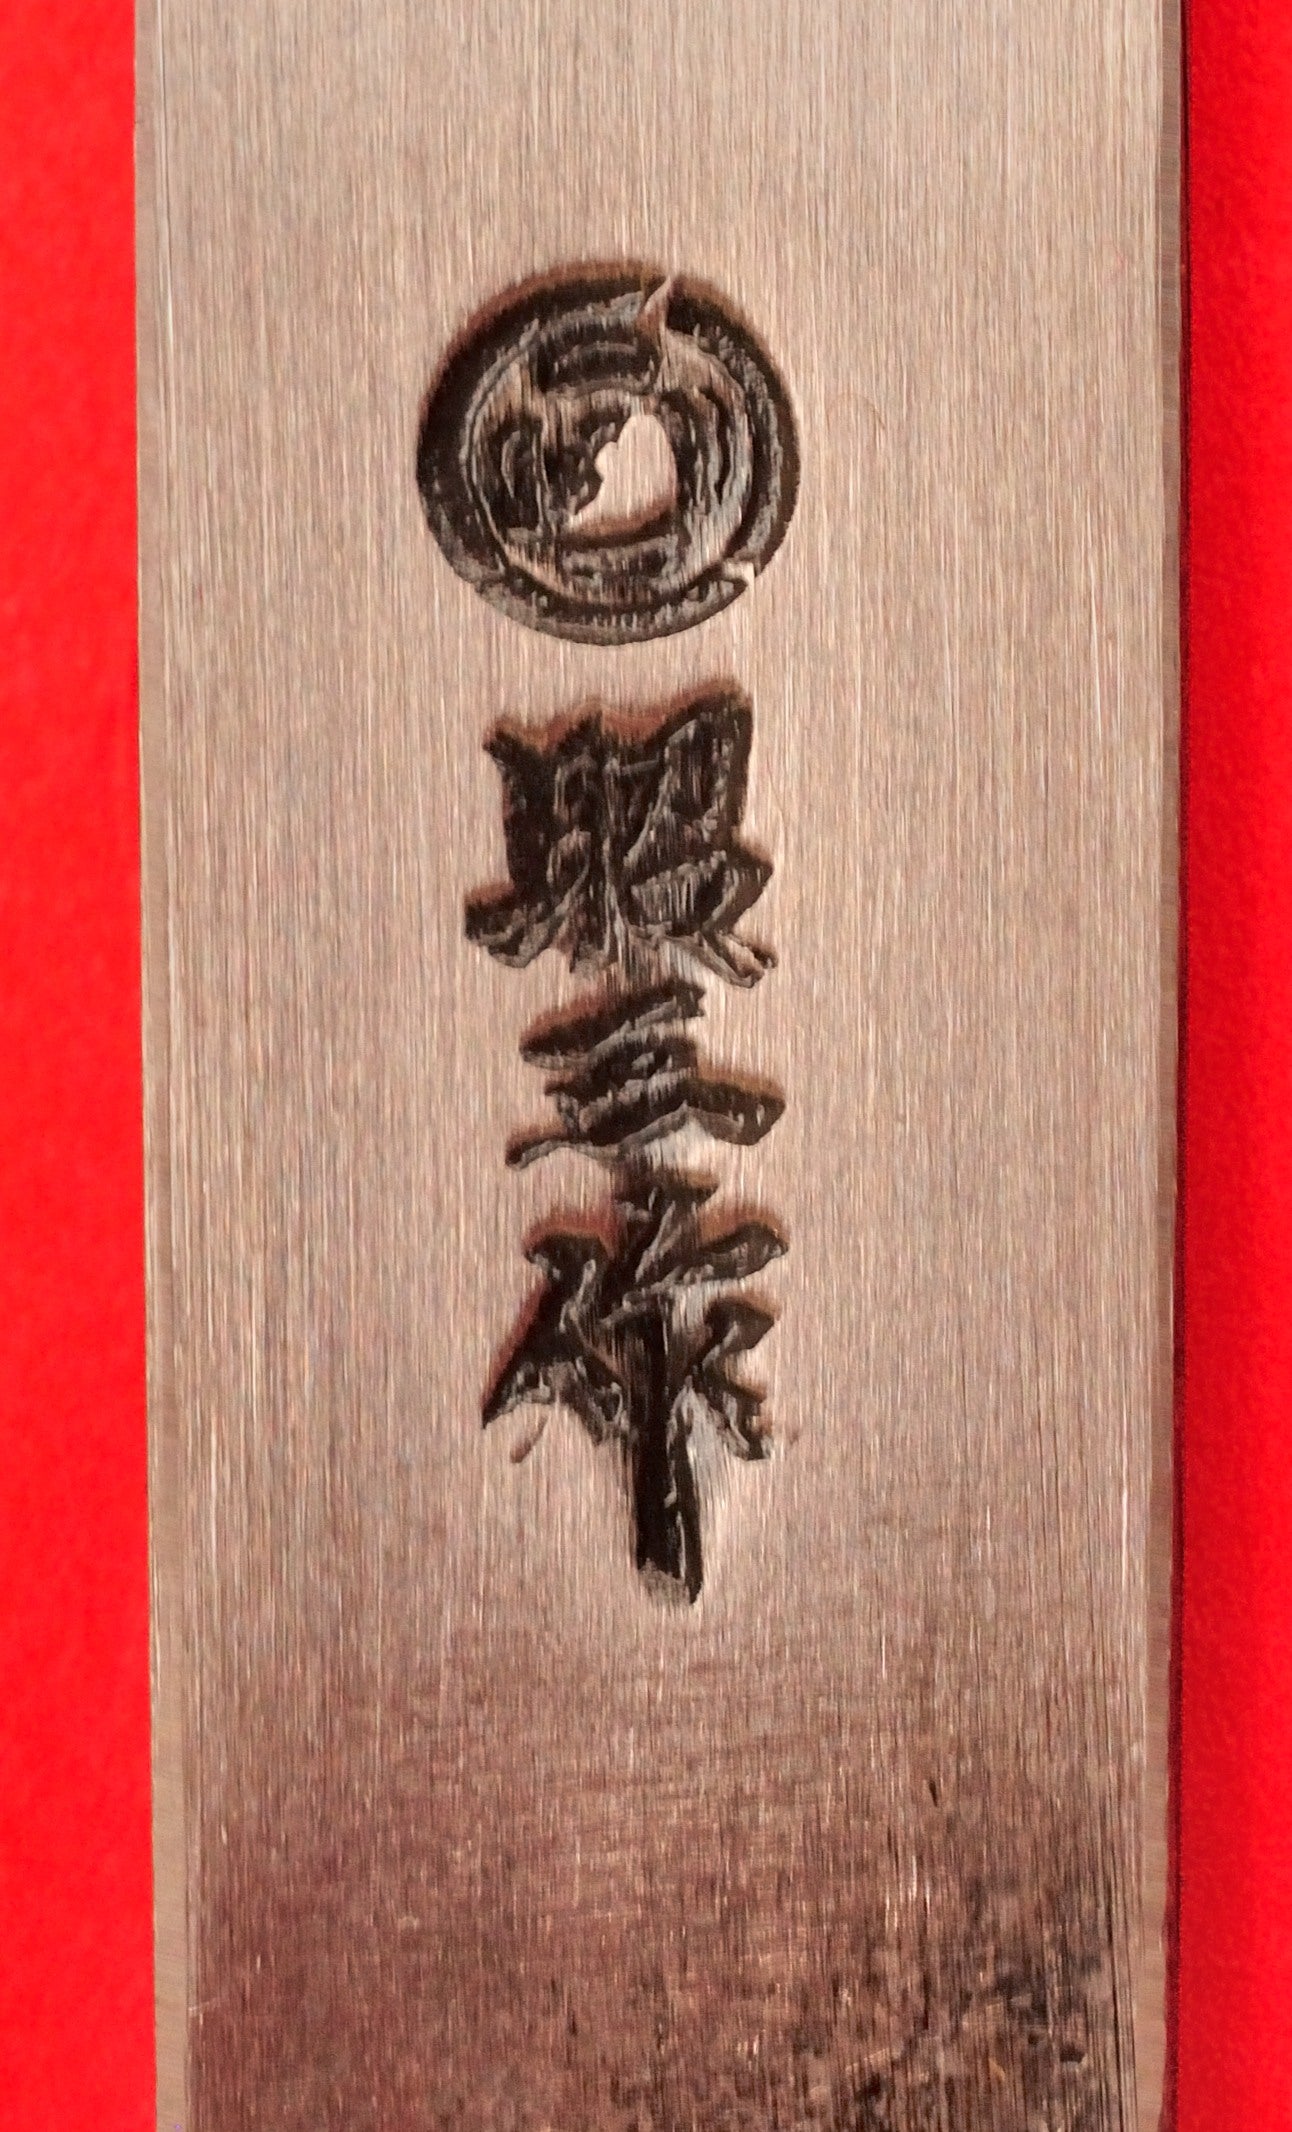 Hand-forged 9mm Kiridashi carving marking chisel Made in Japan